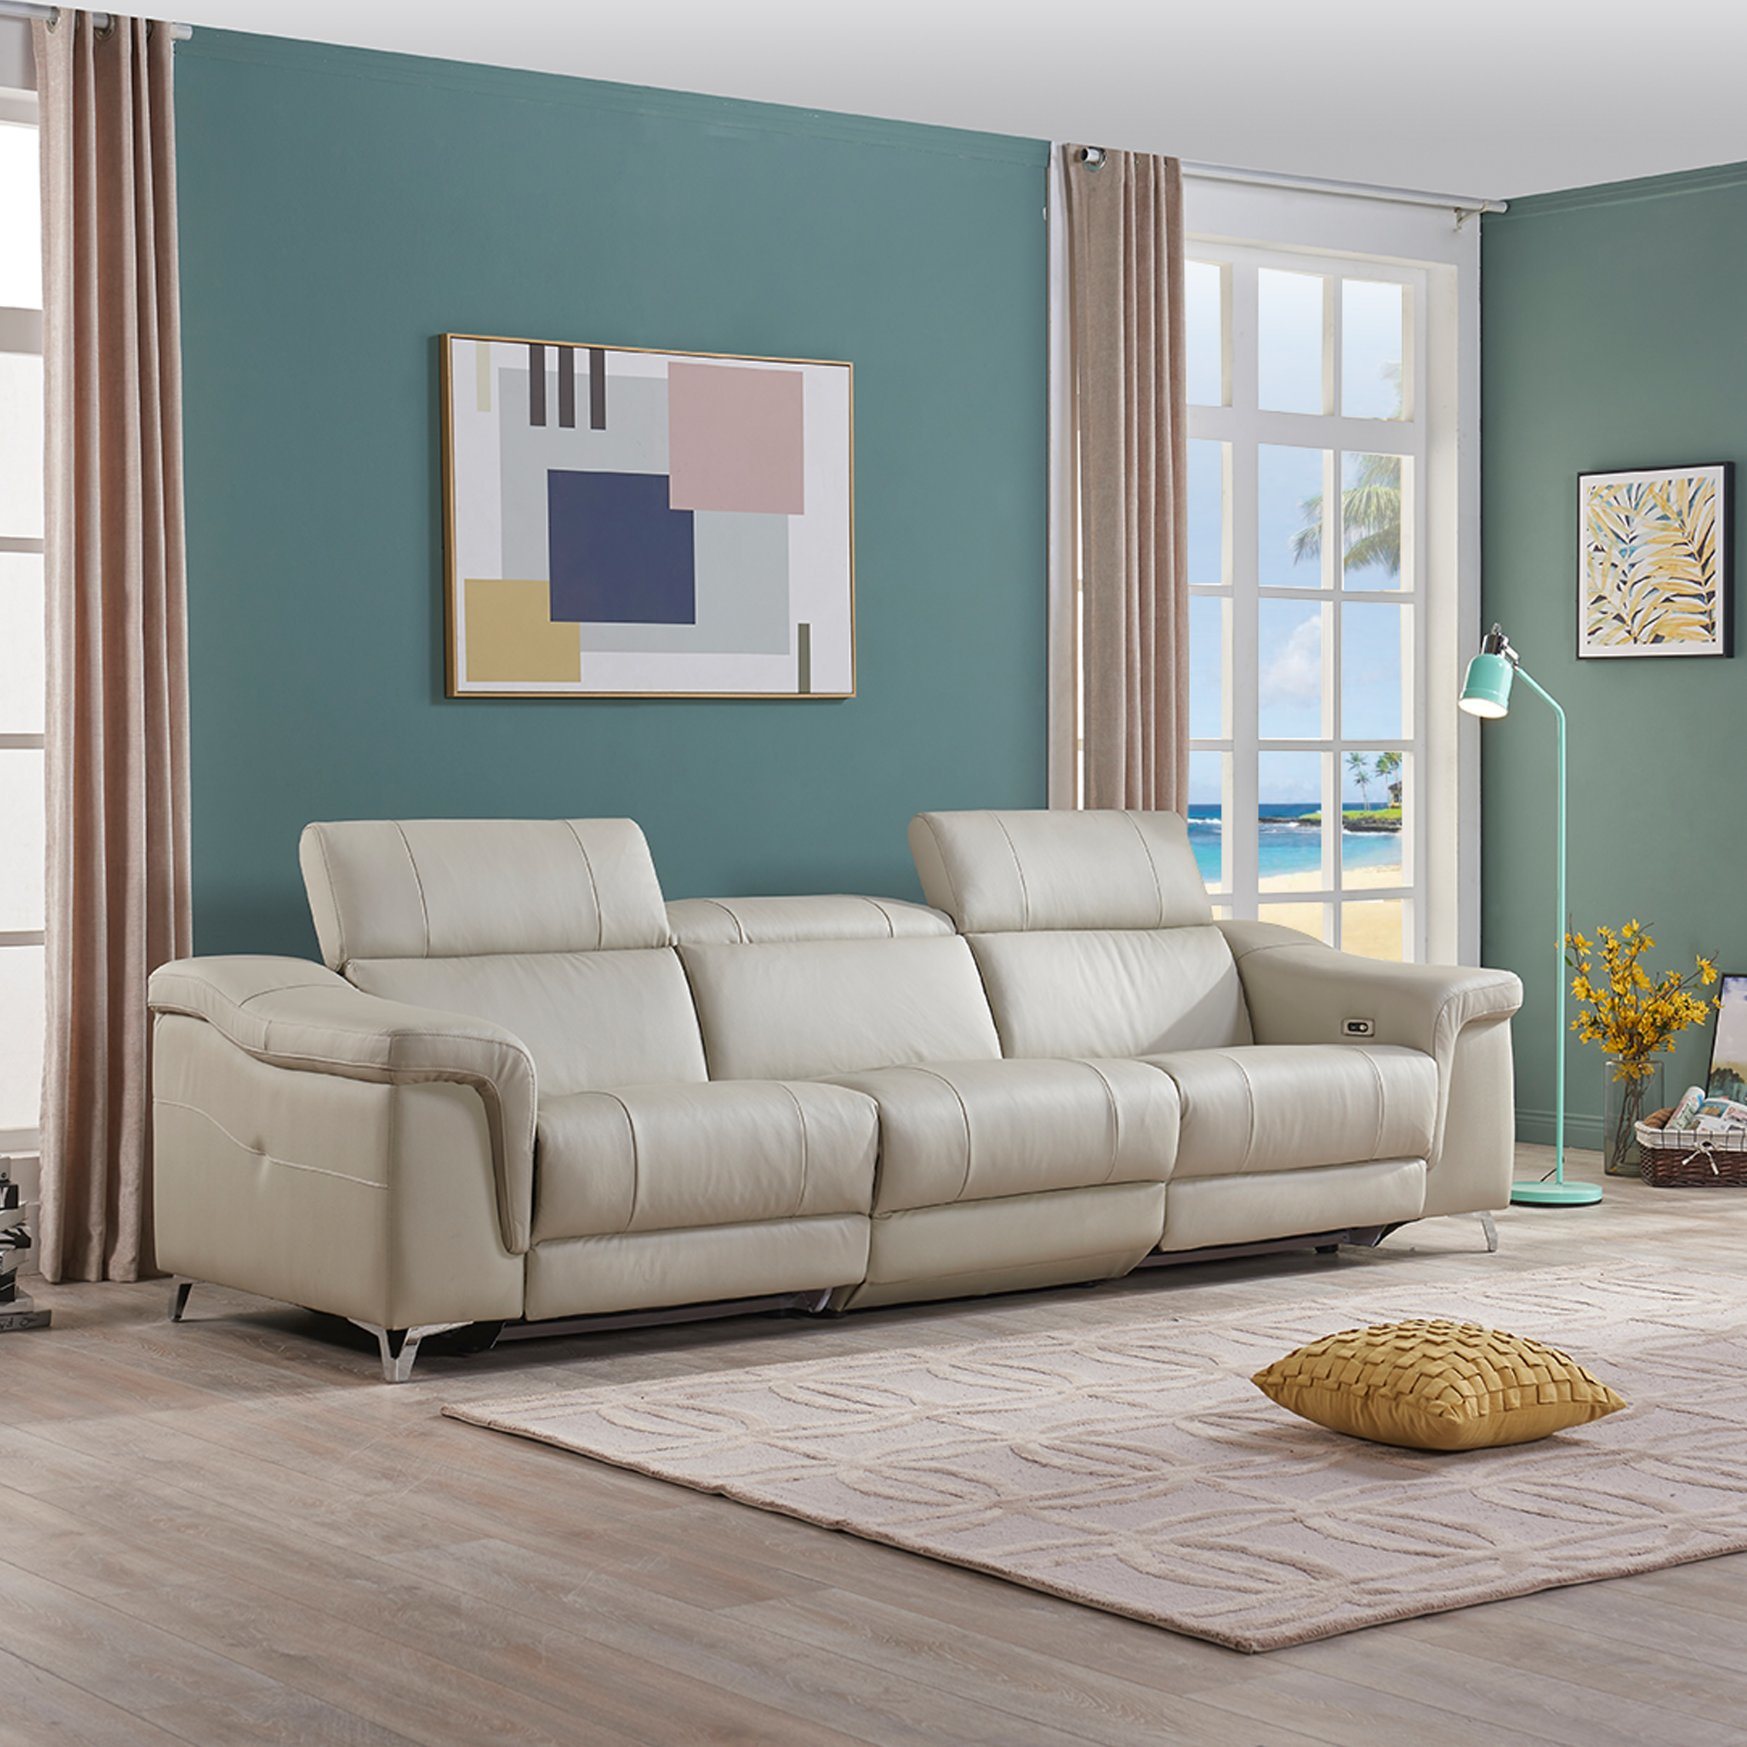 2022 Hot Sale Living Room Fabric Reclining Sofa Home Furniture